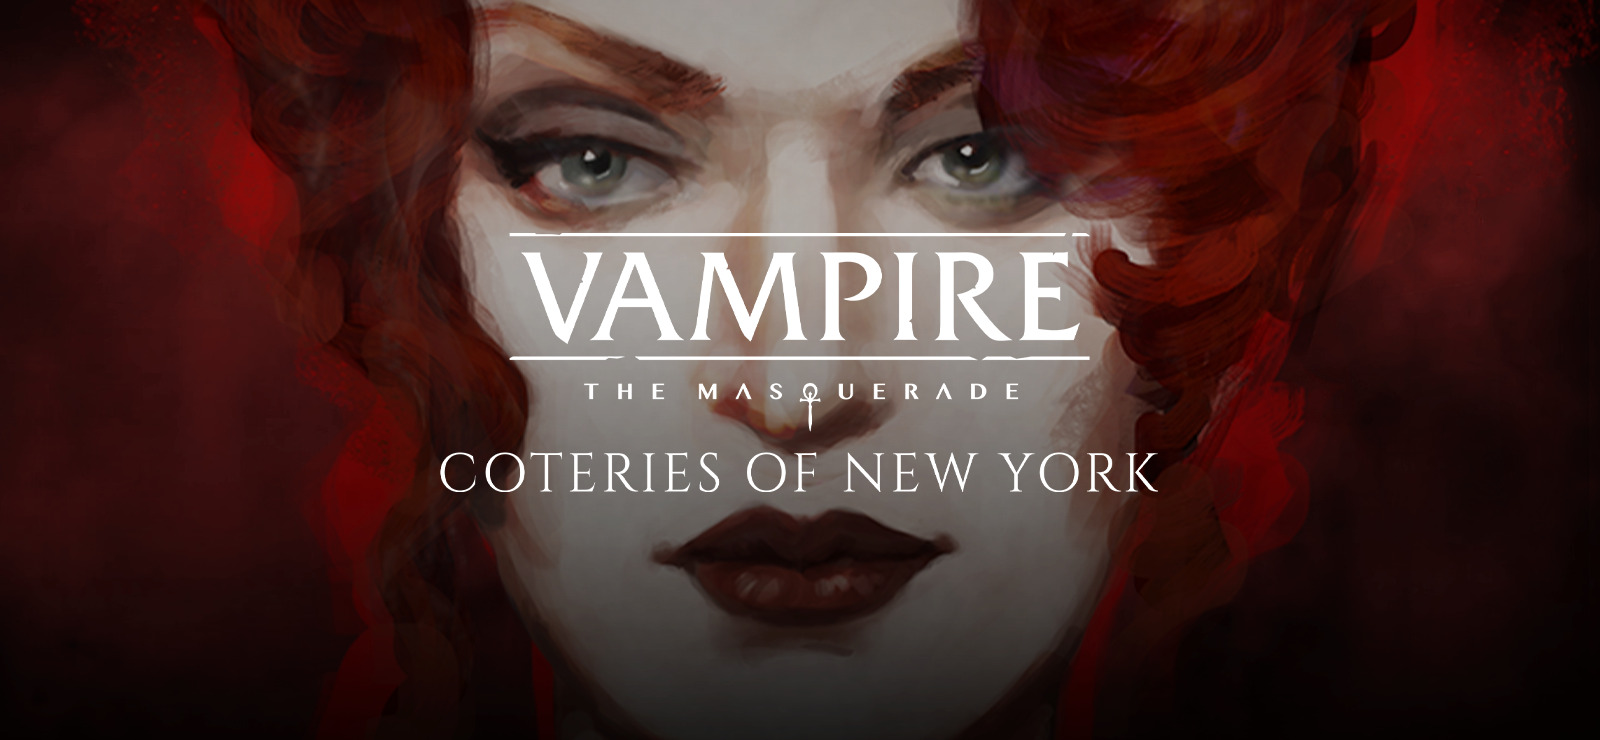 90% Vampire: The Masquerade - Coteries of New York on